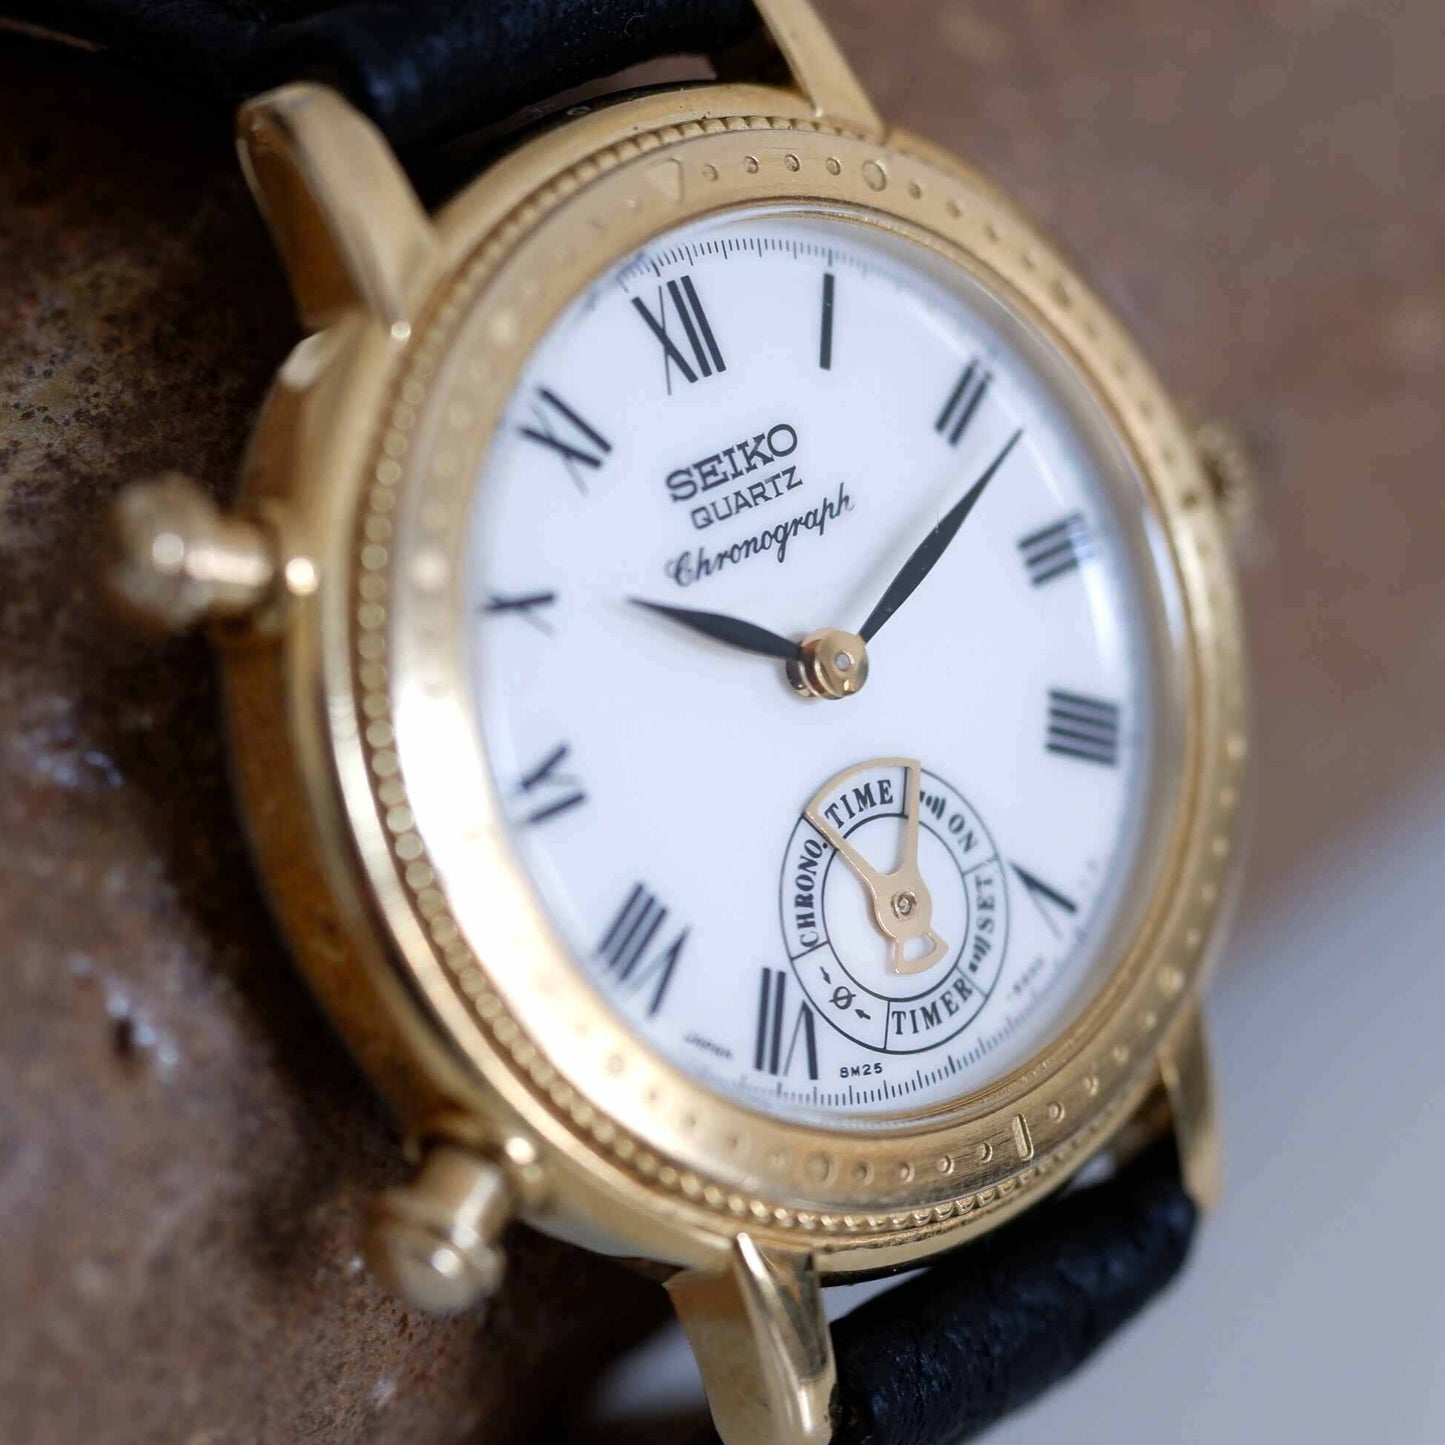 Seiko Chronograph Vintage Ladies Watch: 90s Golden with Roman Numerals | Slight Left Side